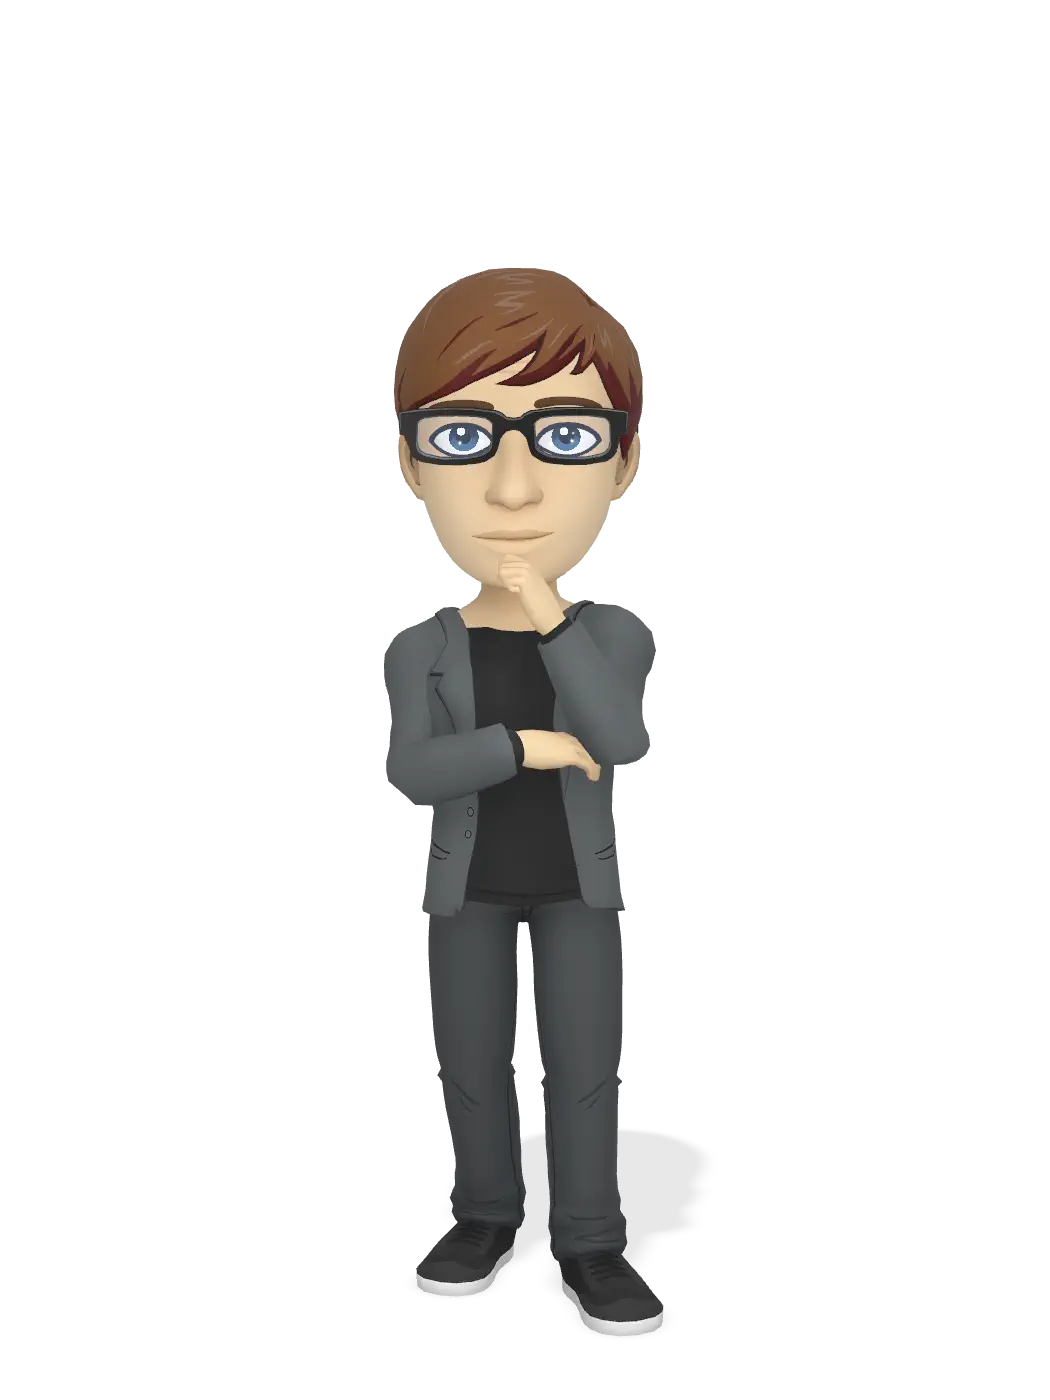 3D Bitmoji for gomme_s avatar